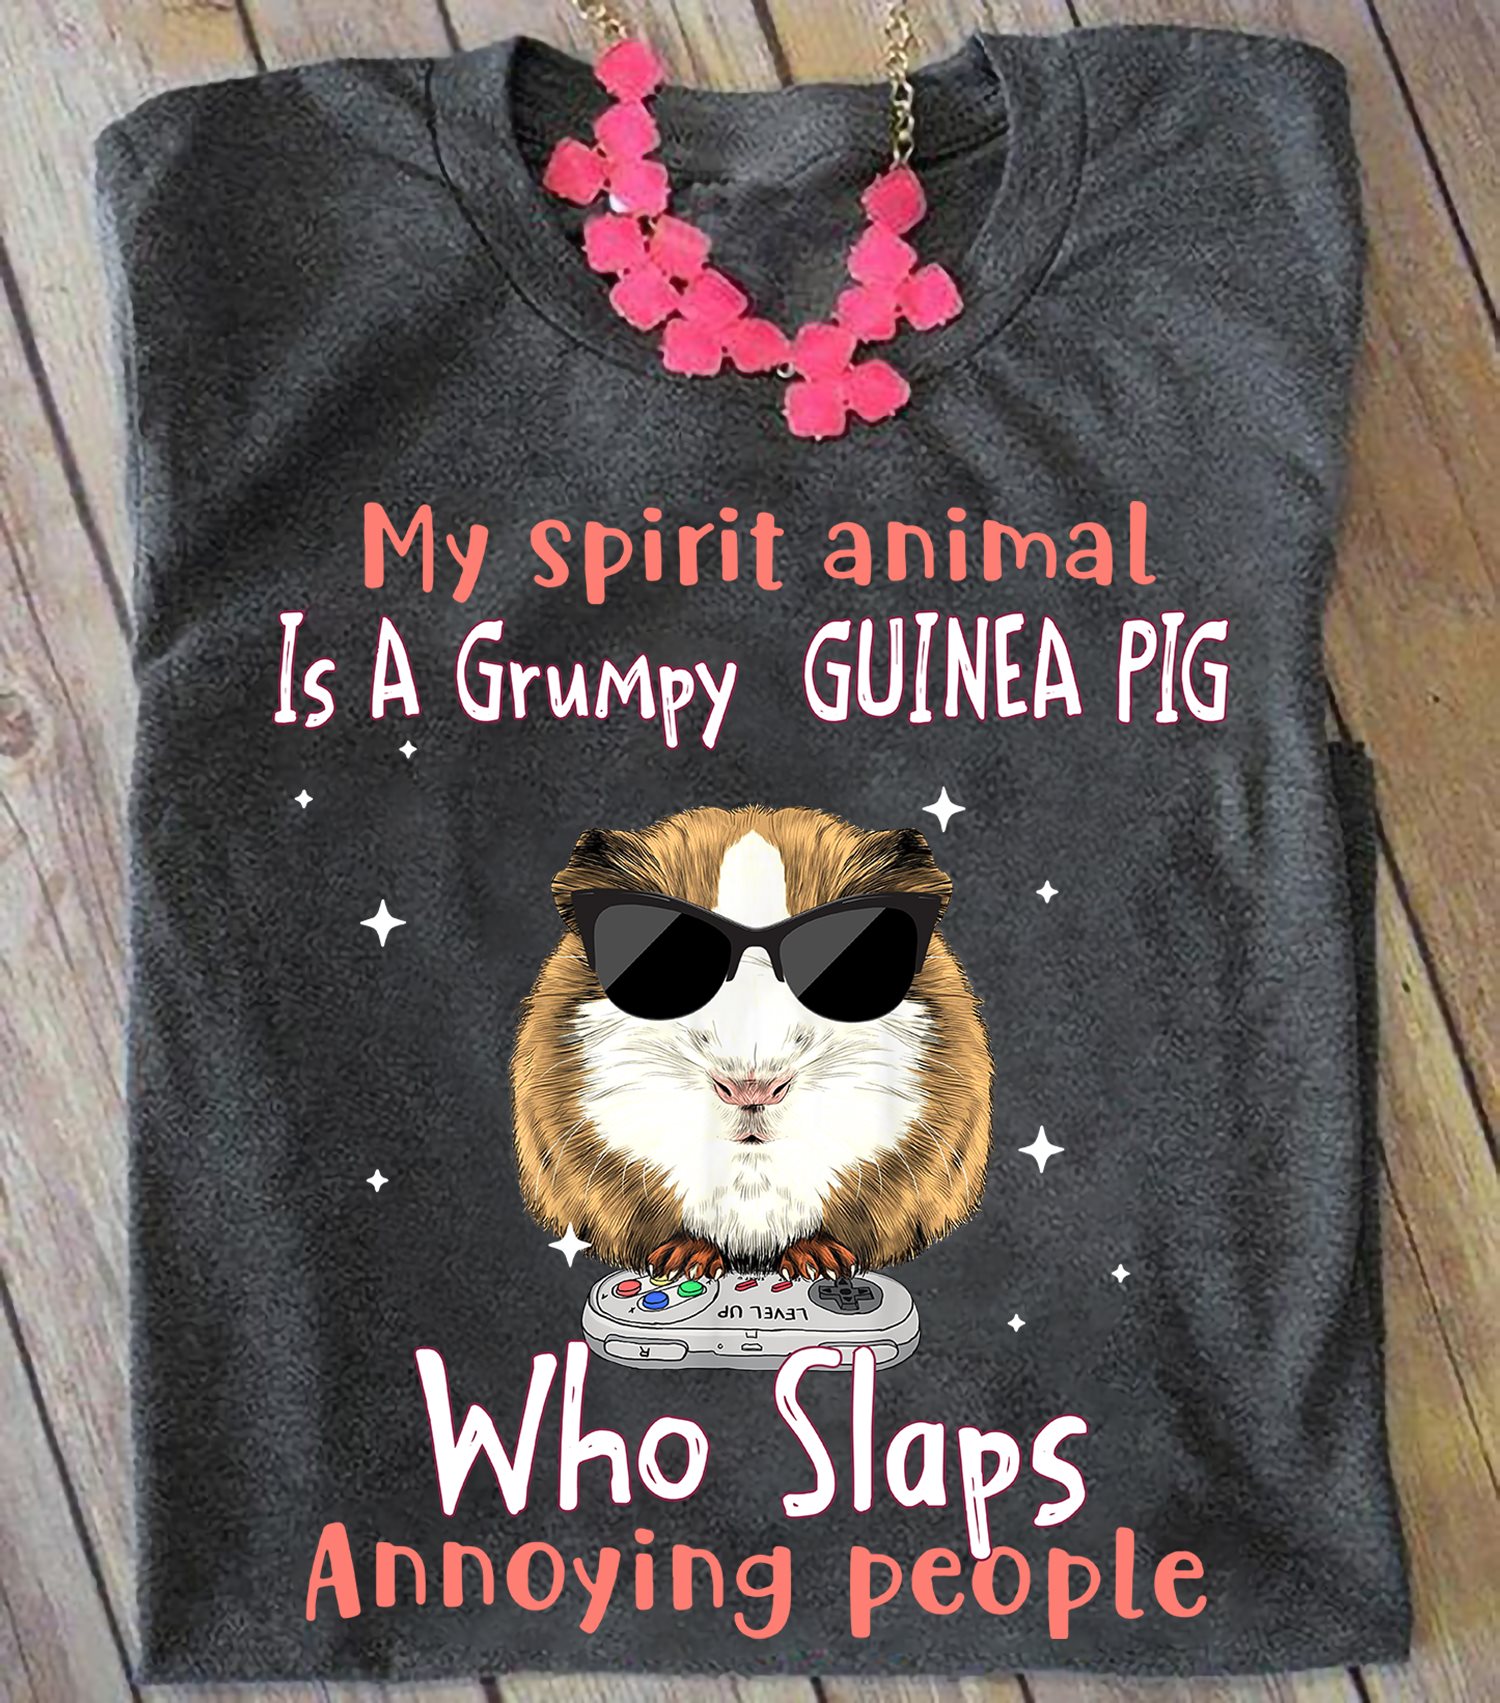 My spirit animal is a grumpy guinea pig who slaps annoying people